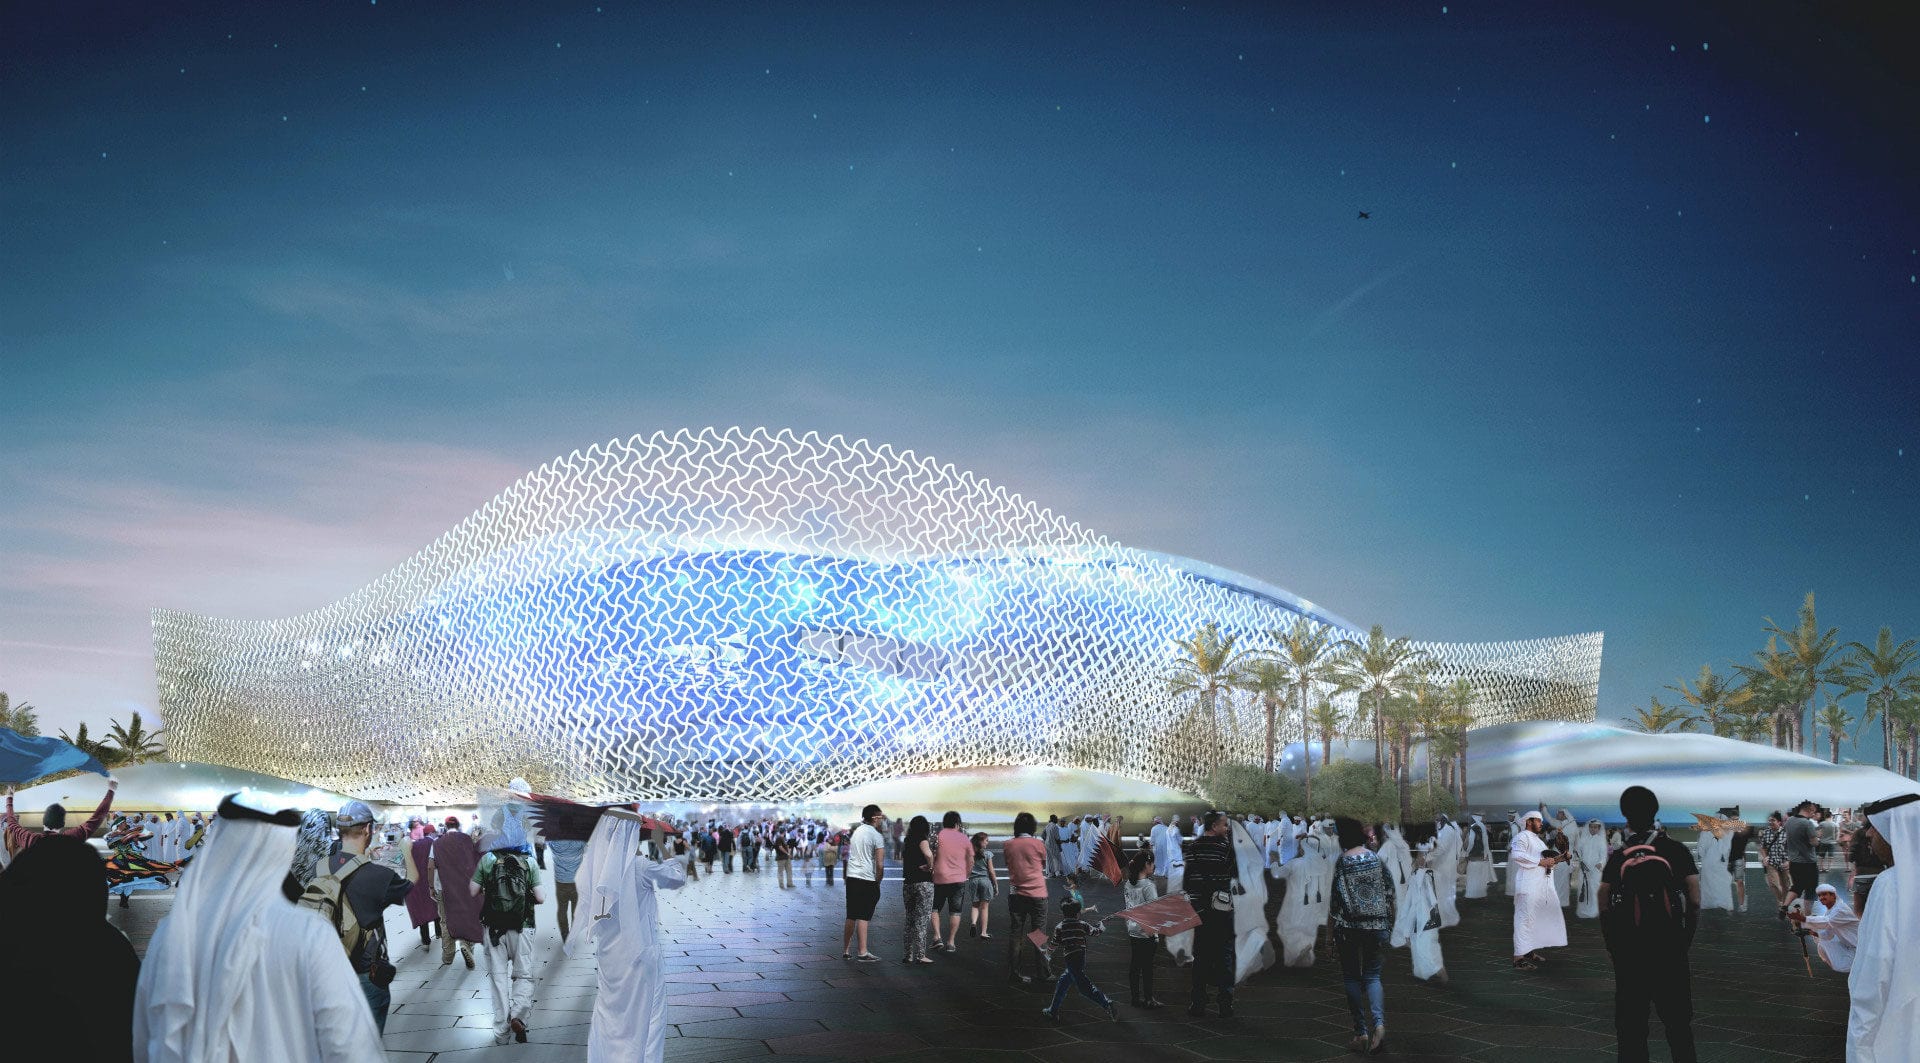 qatar travel world cup